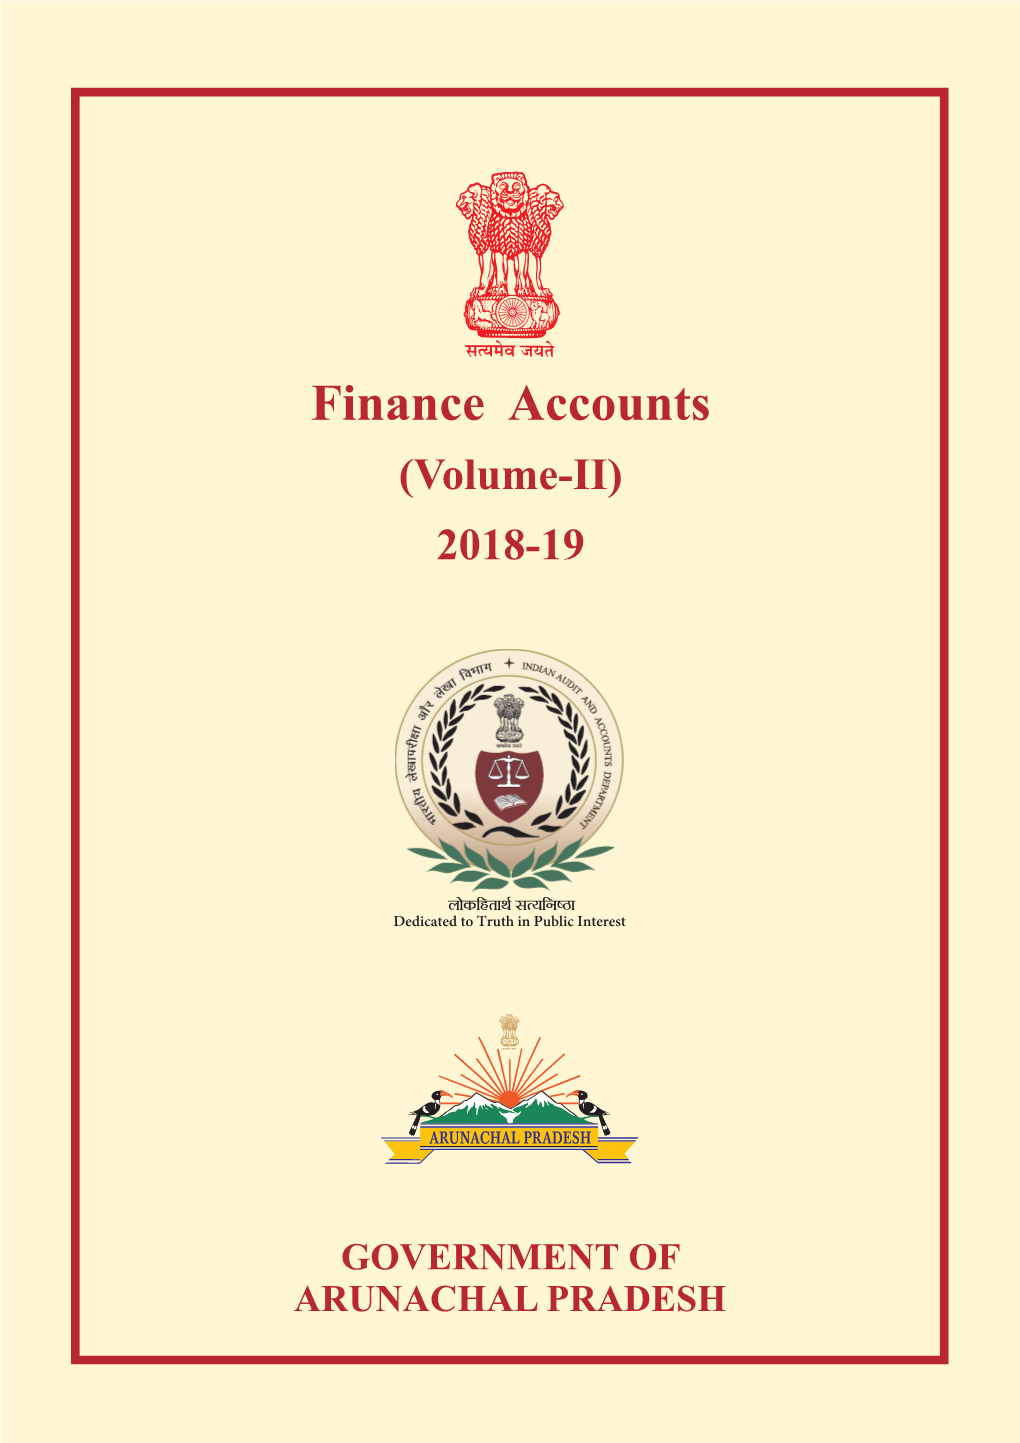 Finance Accounts, Arunachal Pradesh, 2018